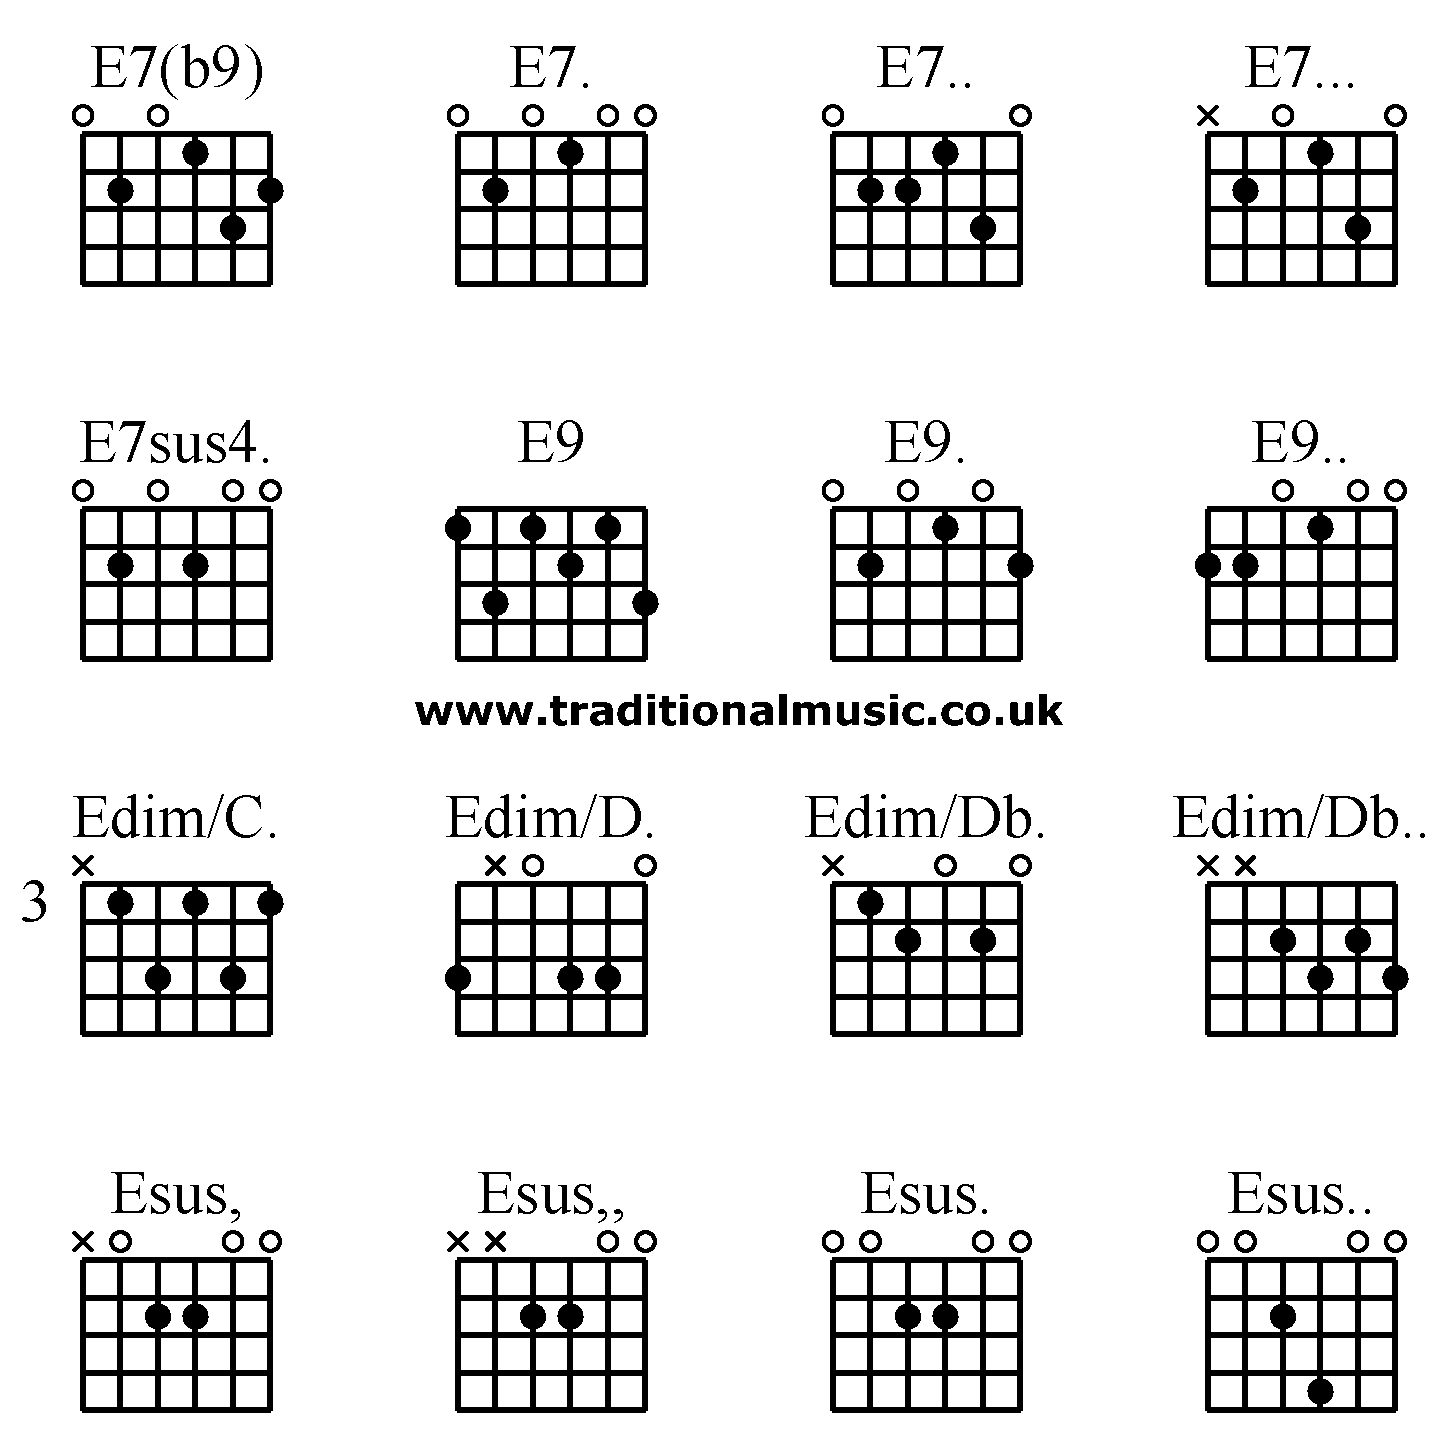 Signal Forenkle Putte Guitar chords advanced - E7(b9) E7. E7. E7. E7sus4. E9 E9. E9. Edim/C.  Edim/D. Edim/Db. Edim/Db. Esus, Esus, Esus. Esus.